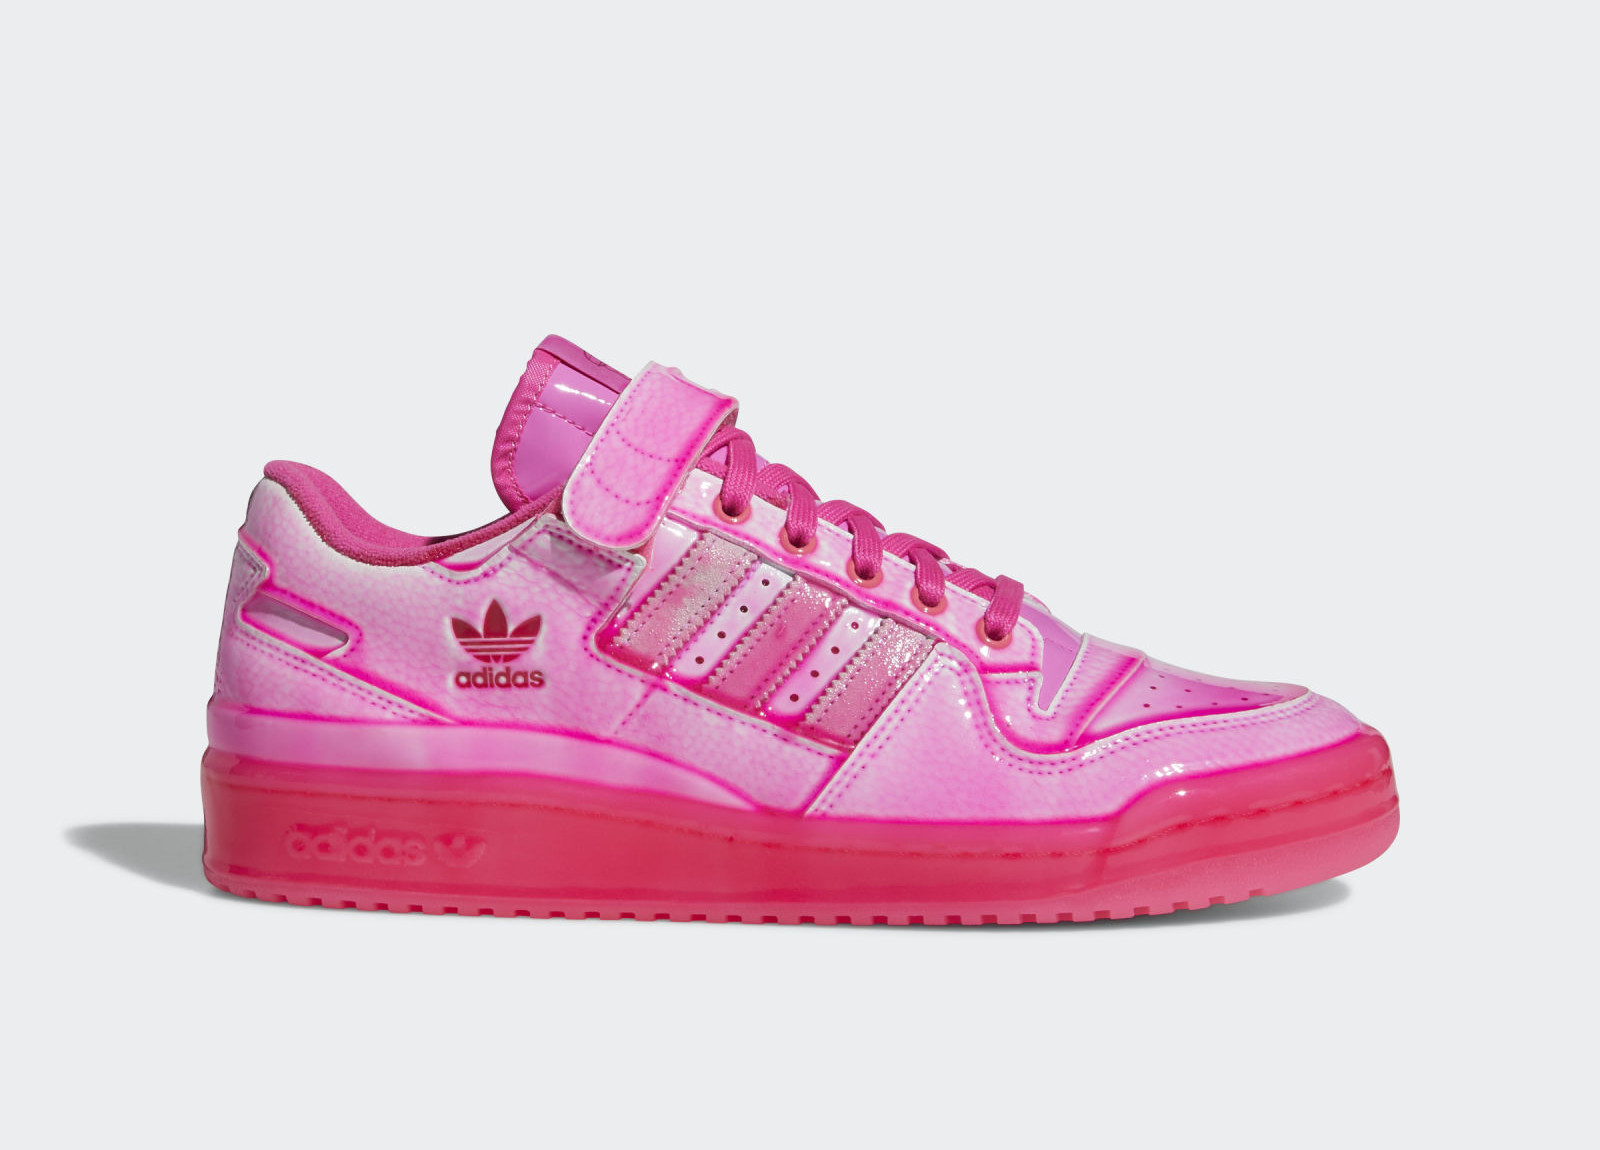 Jeremy Scott x Adidas
Forum Dipped Low
« Pink »